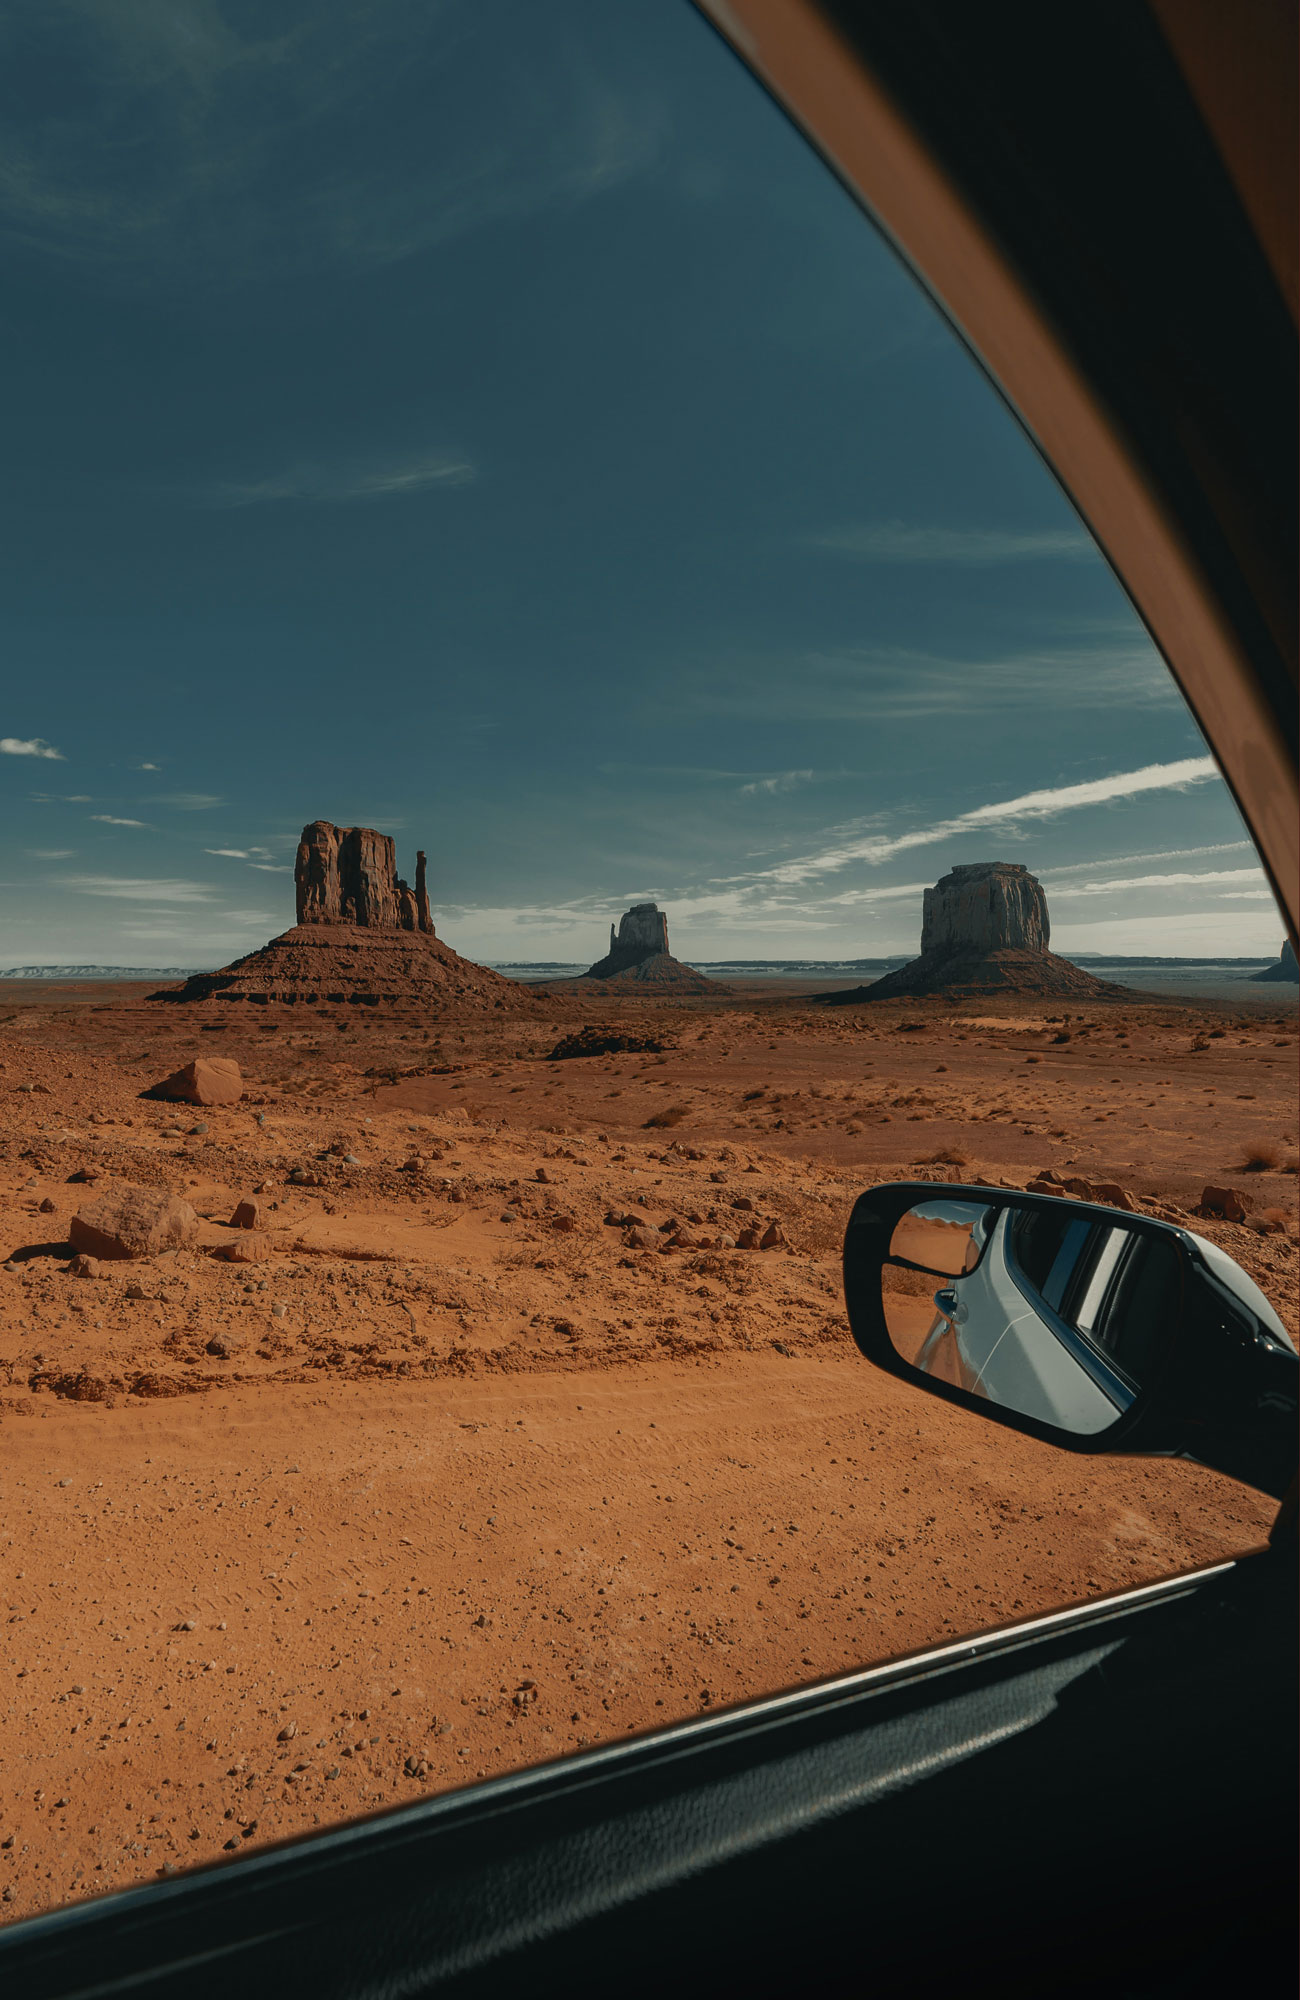 View of desert and rocks taken through a car window